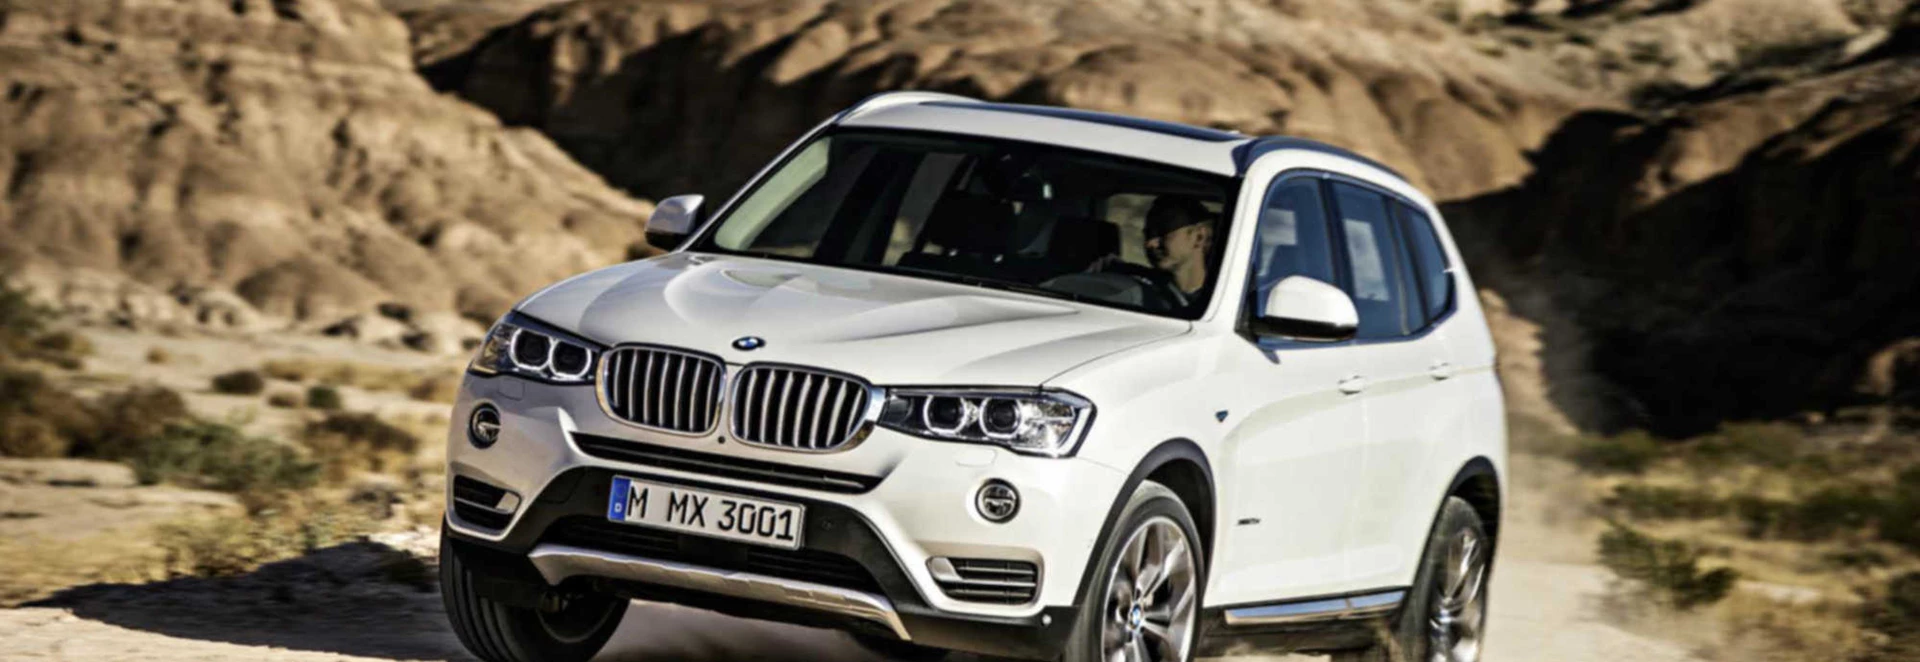 BMW X3 4x4 review 